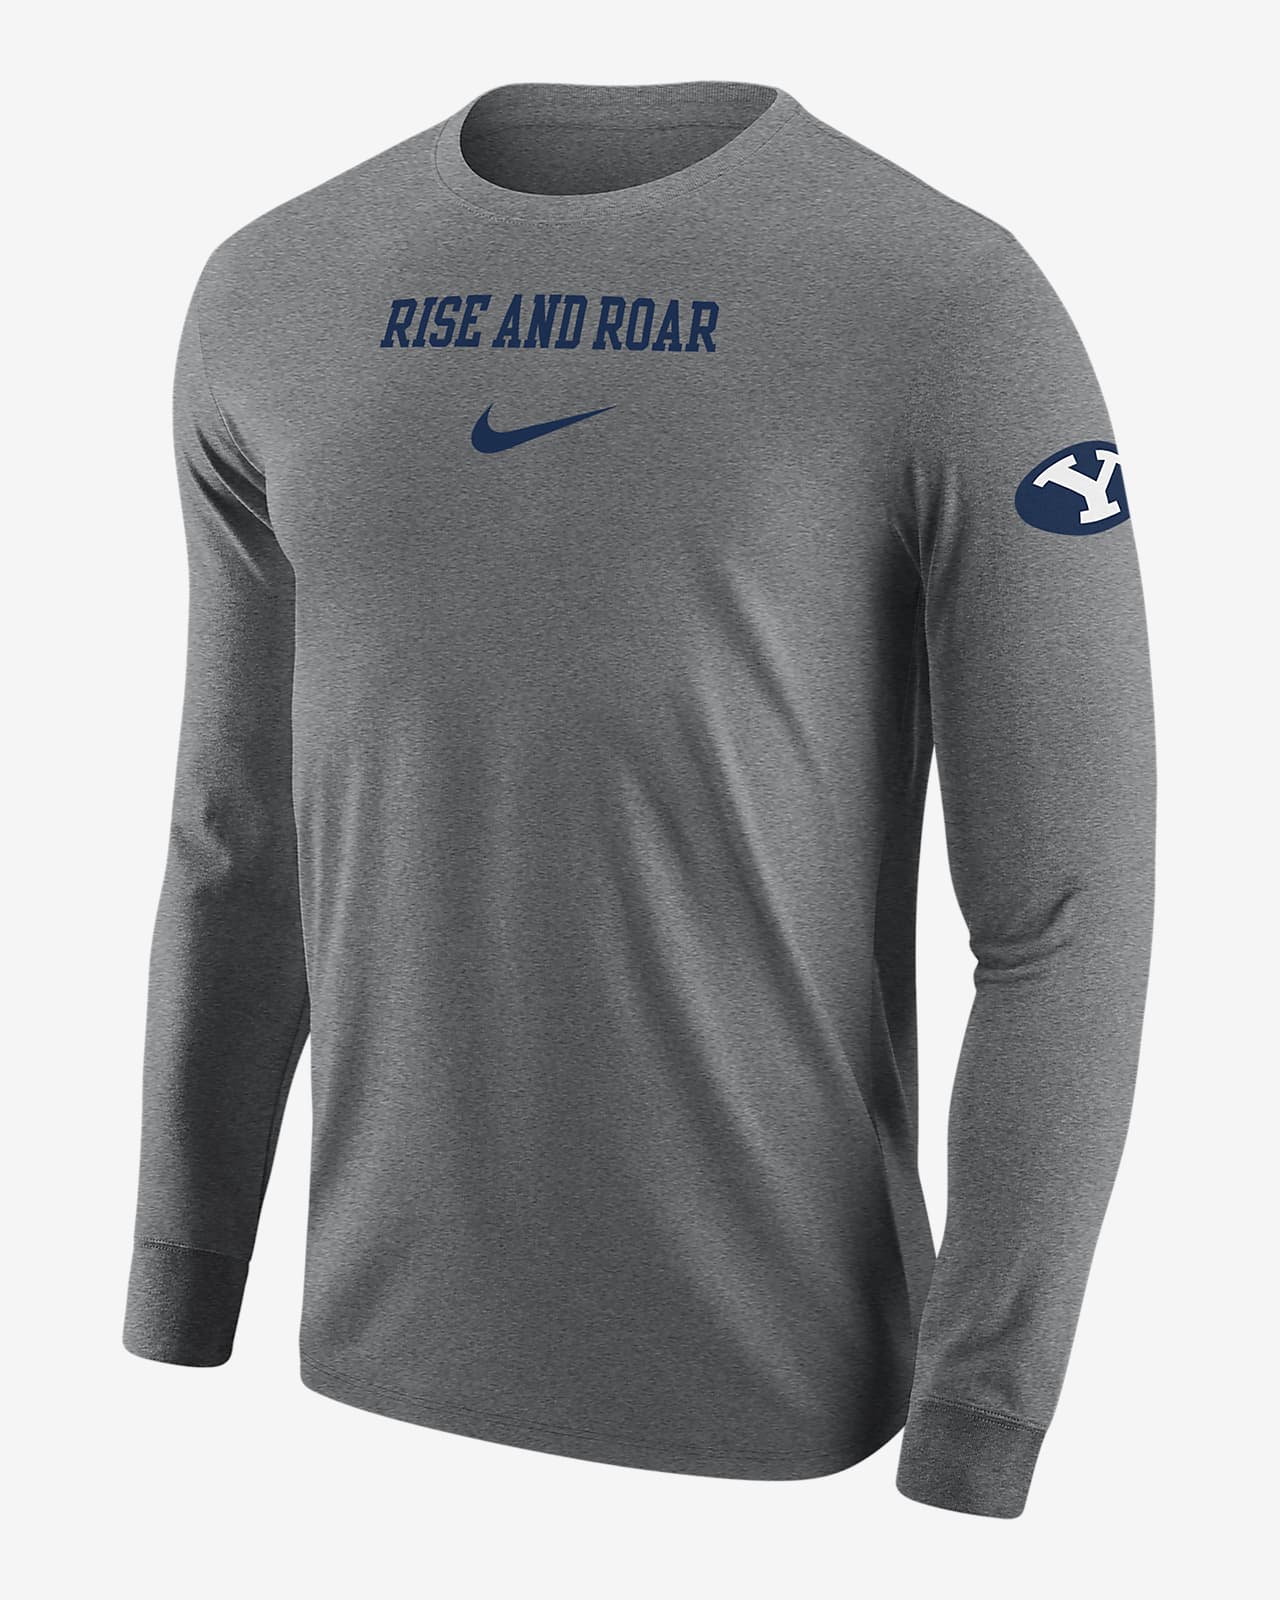 BYU Men's Nike College Long-Sleeve T-Shirt